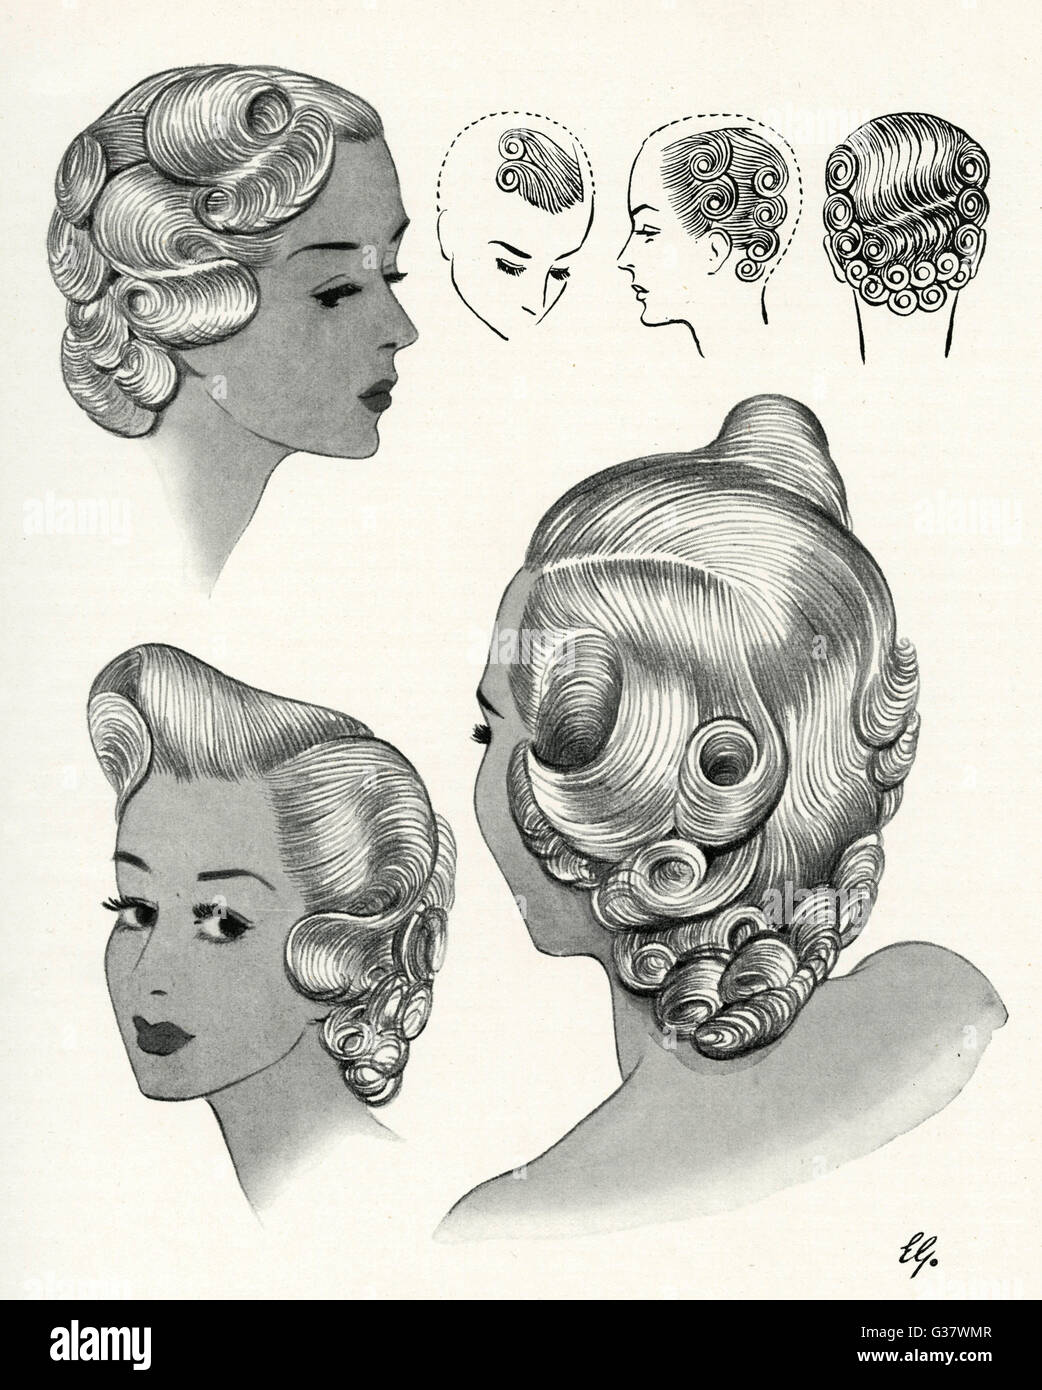 Trafalgar hairstyle 1940s Stock Photo